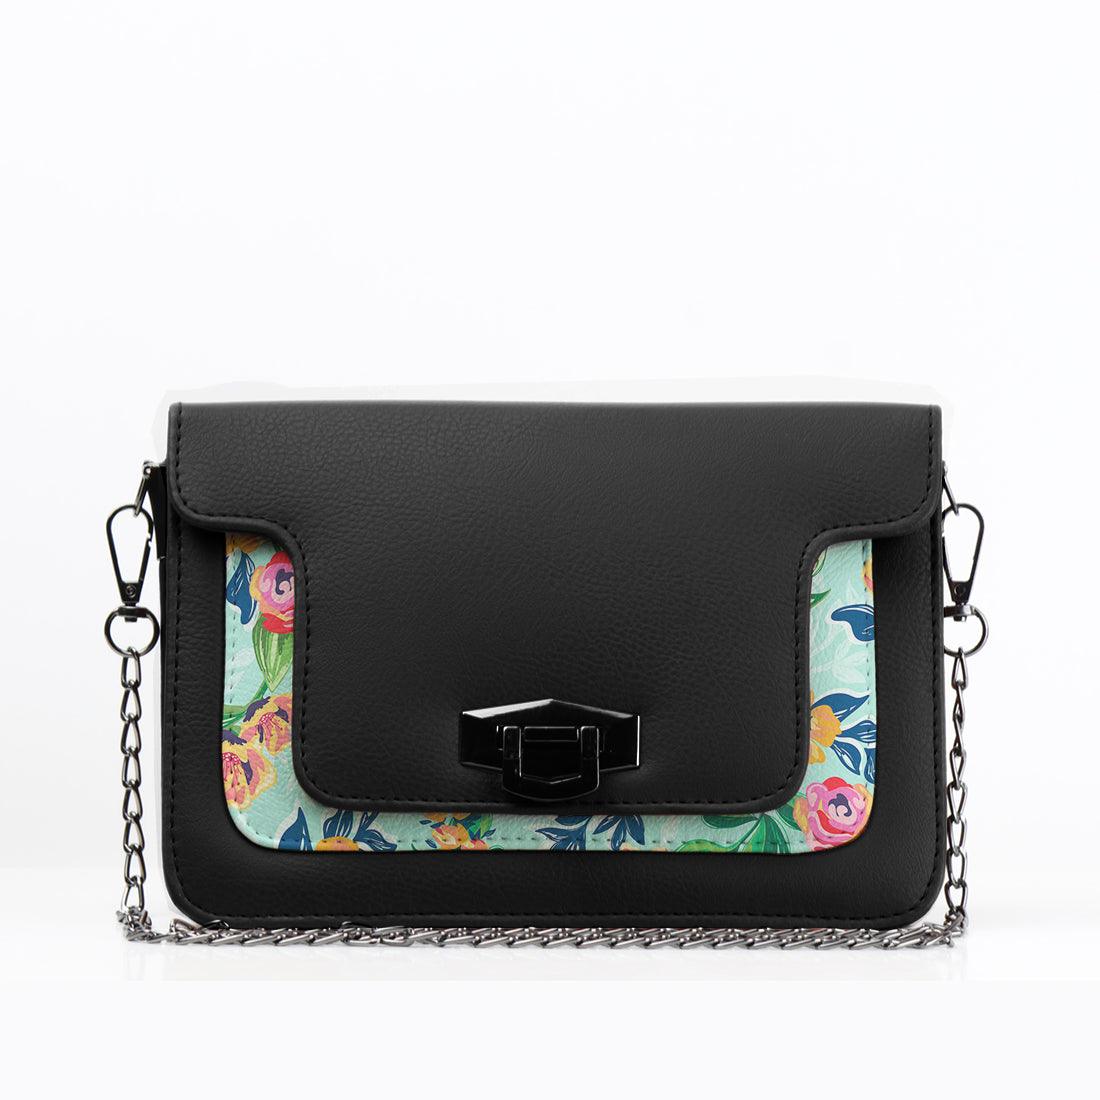 Black Mini Embossed Chain Bag Floral